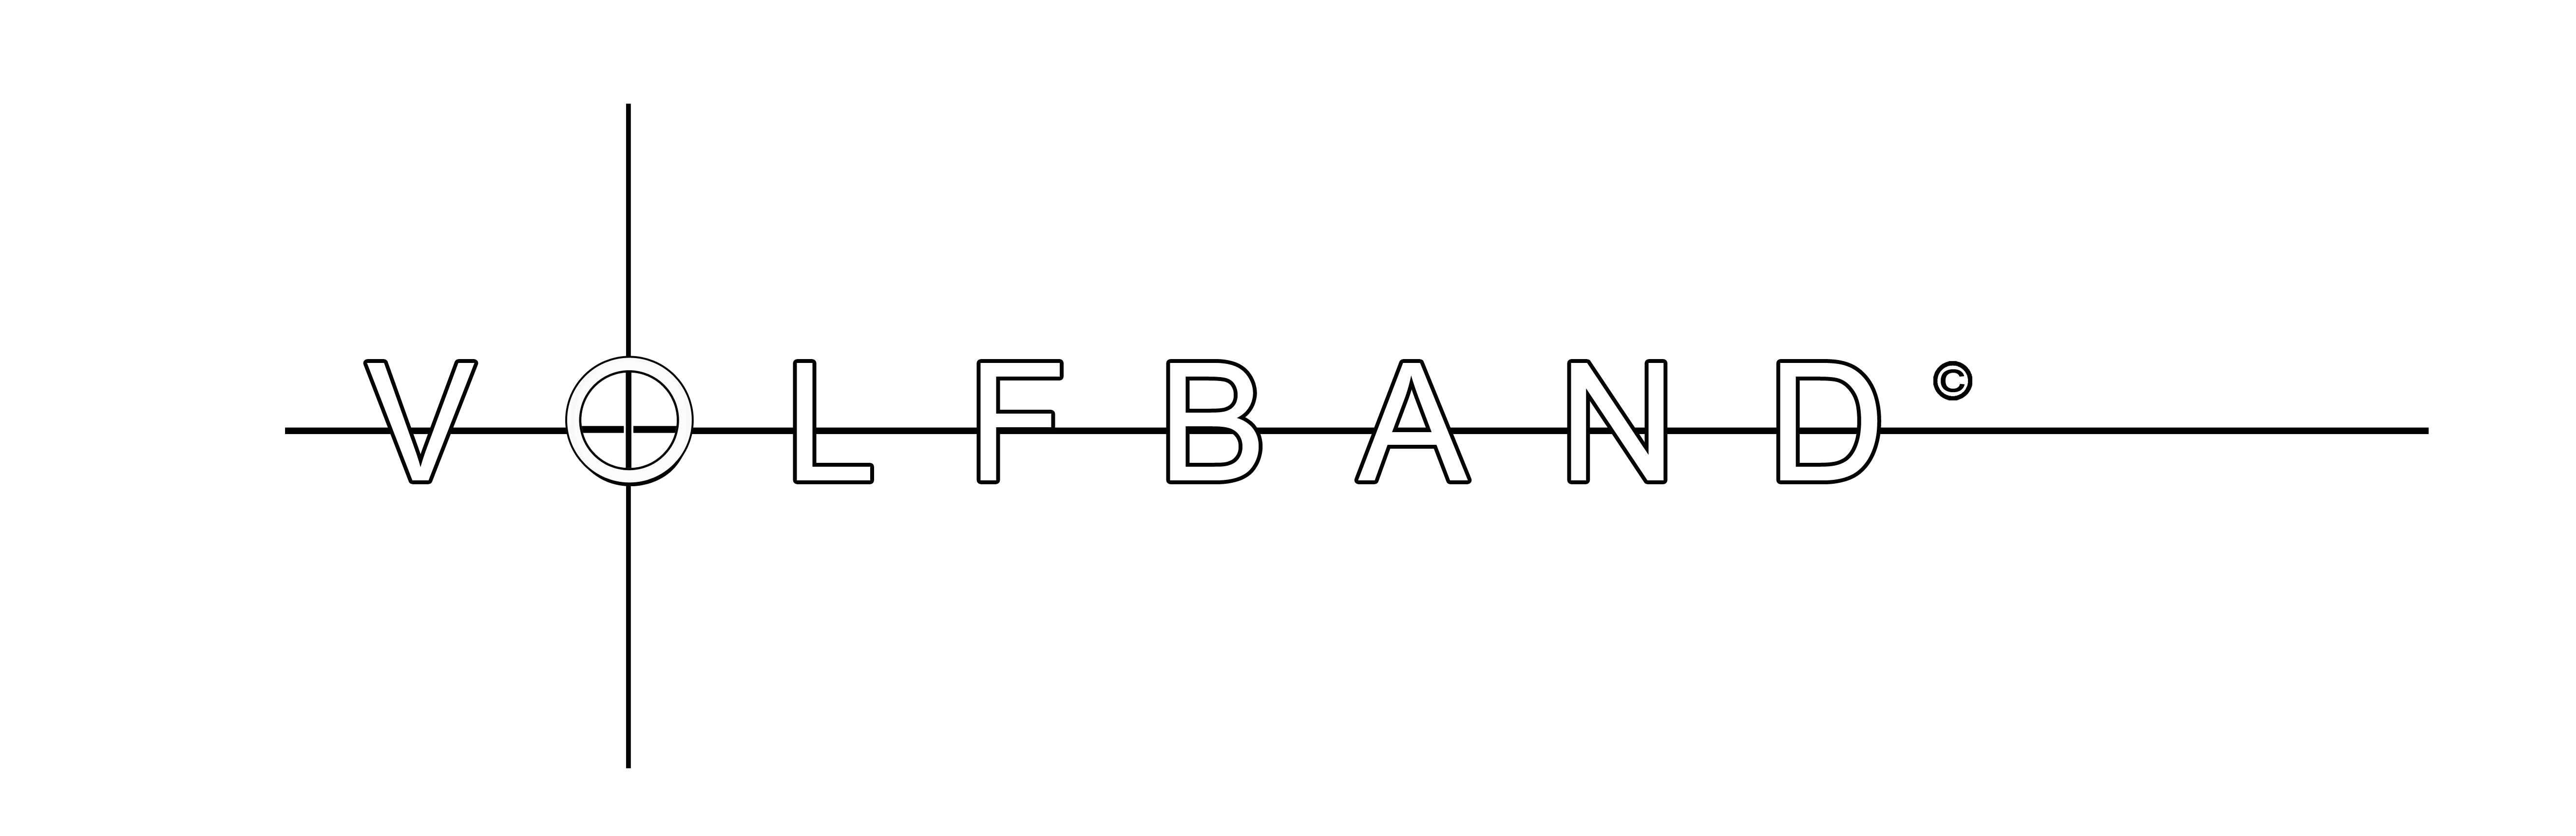 Volf Band - nyt logo 2018